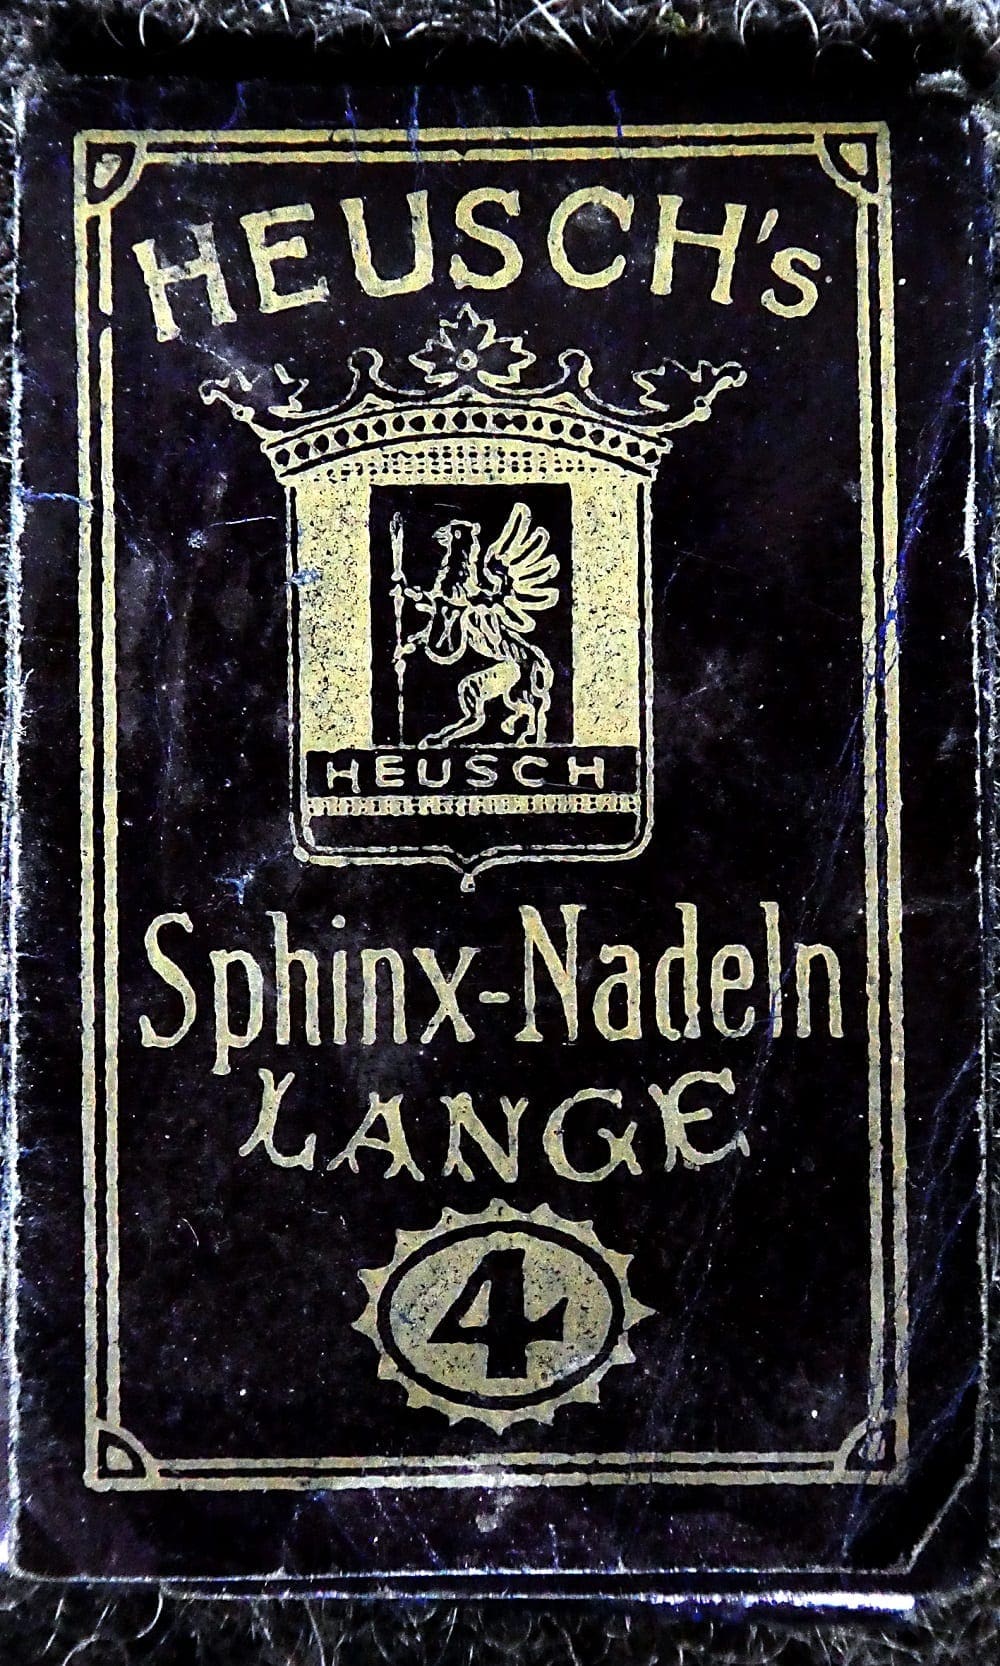 Nadelbrief Sphinx- Nadeln Lange 4 Heusch Aachen ca. 1950